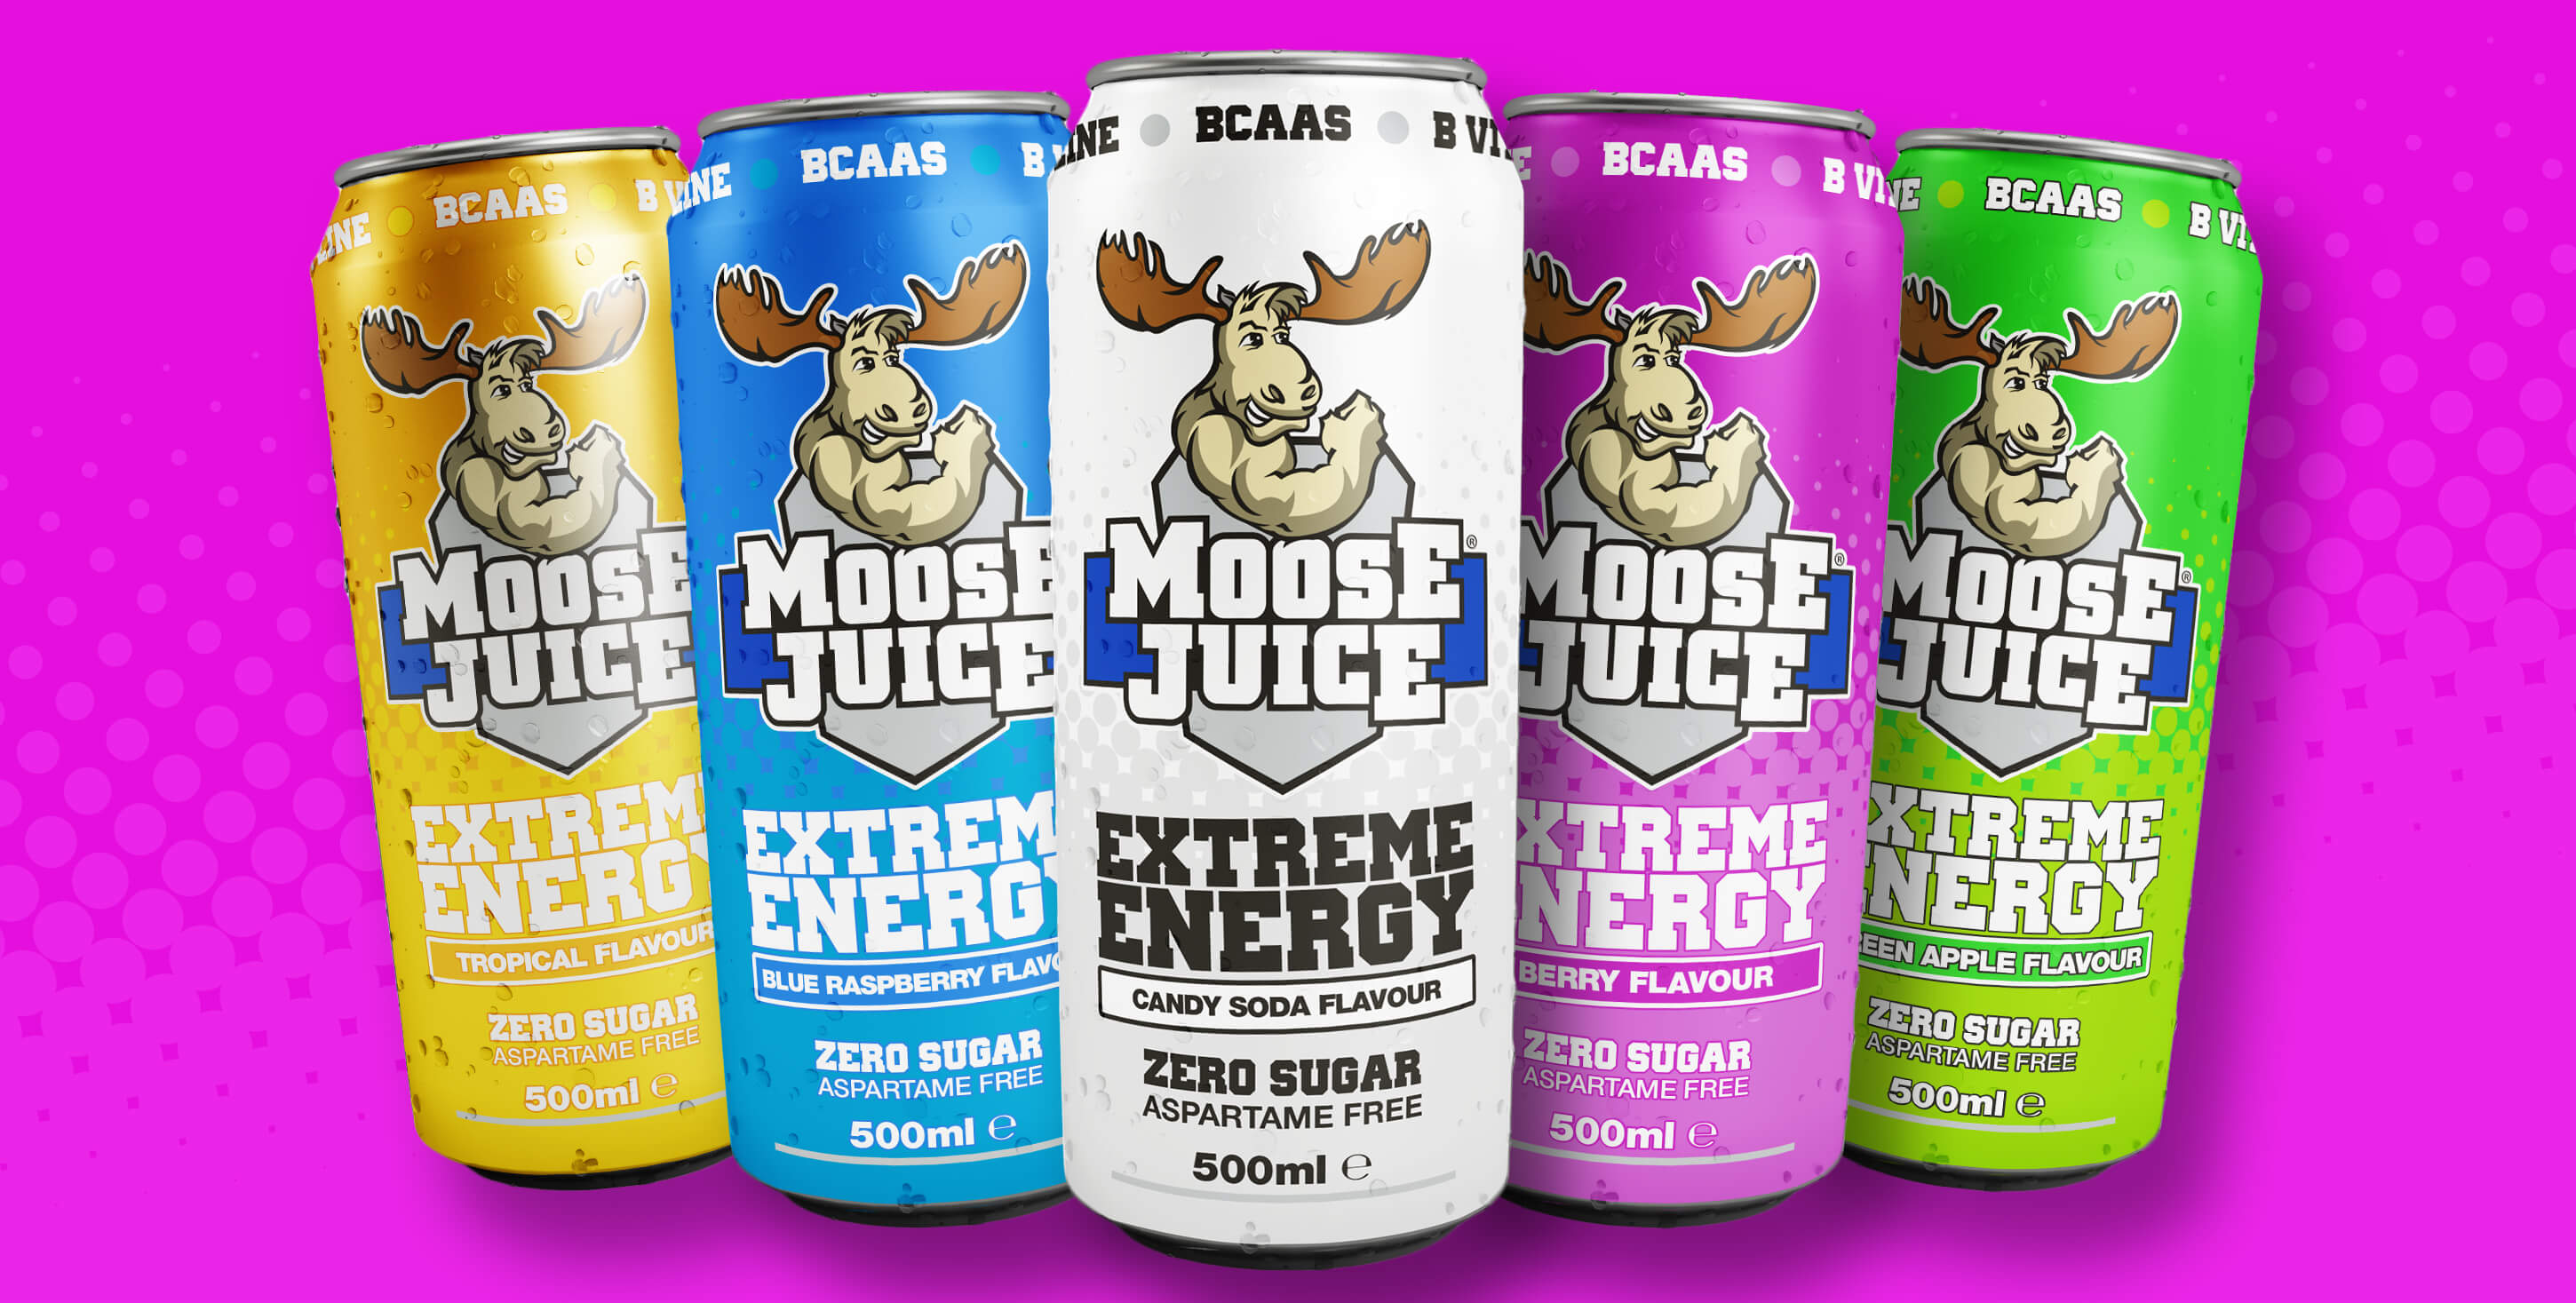 mm-moose-juice-cans